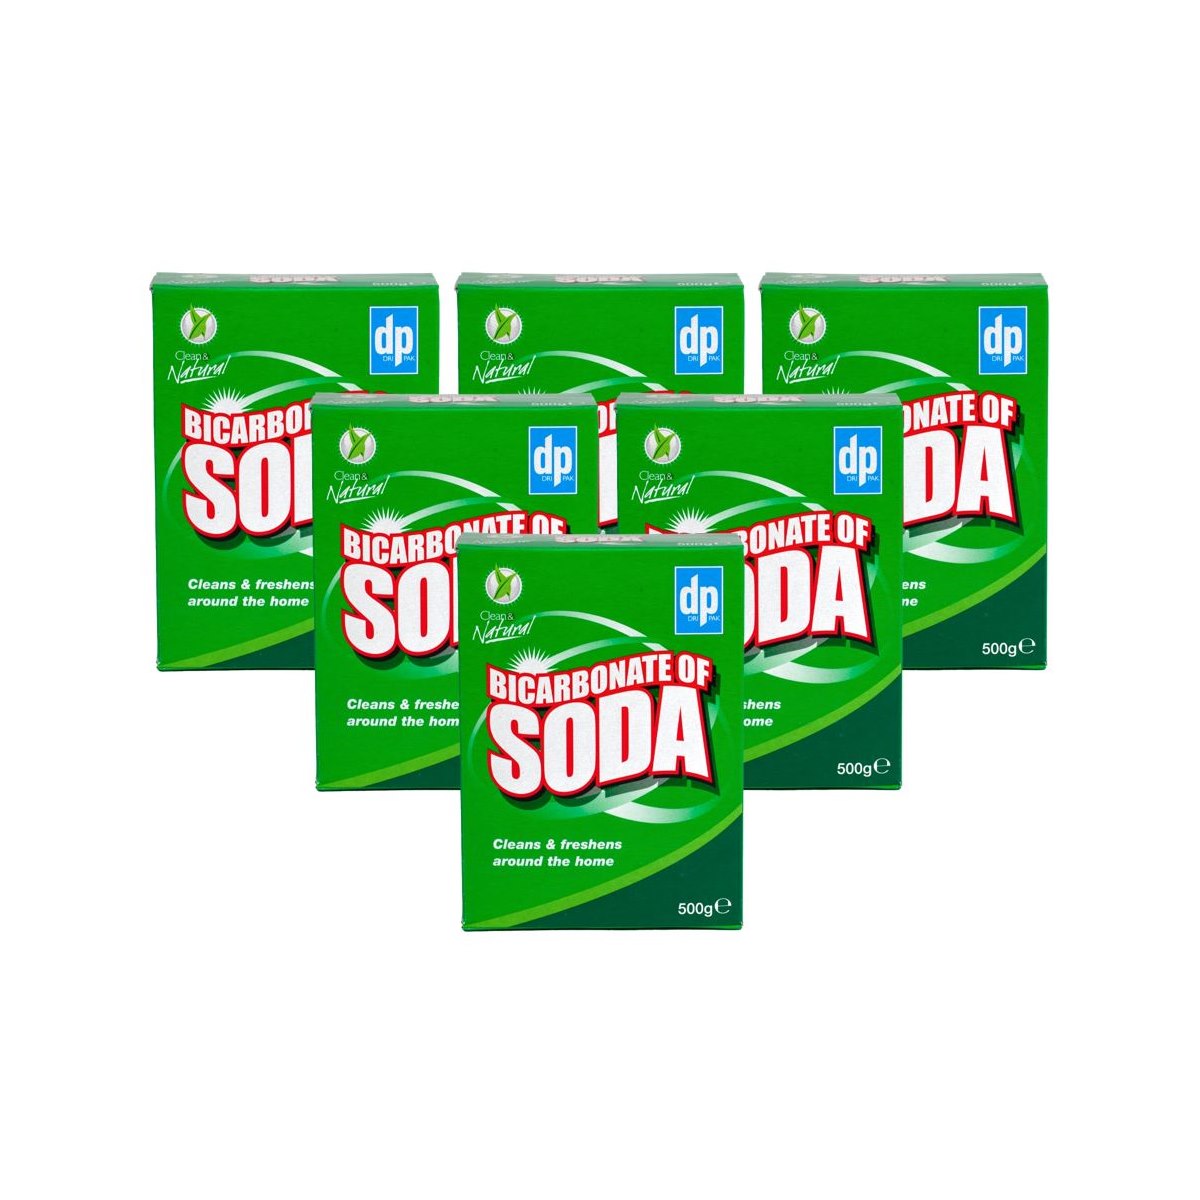 Case of 6 x Dri Pak Clean and Natural Bicarbonate of Soda 500g